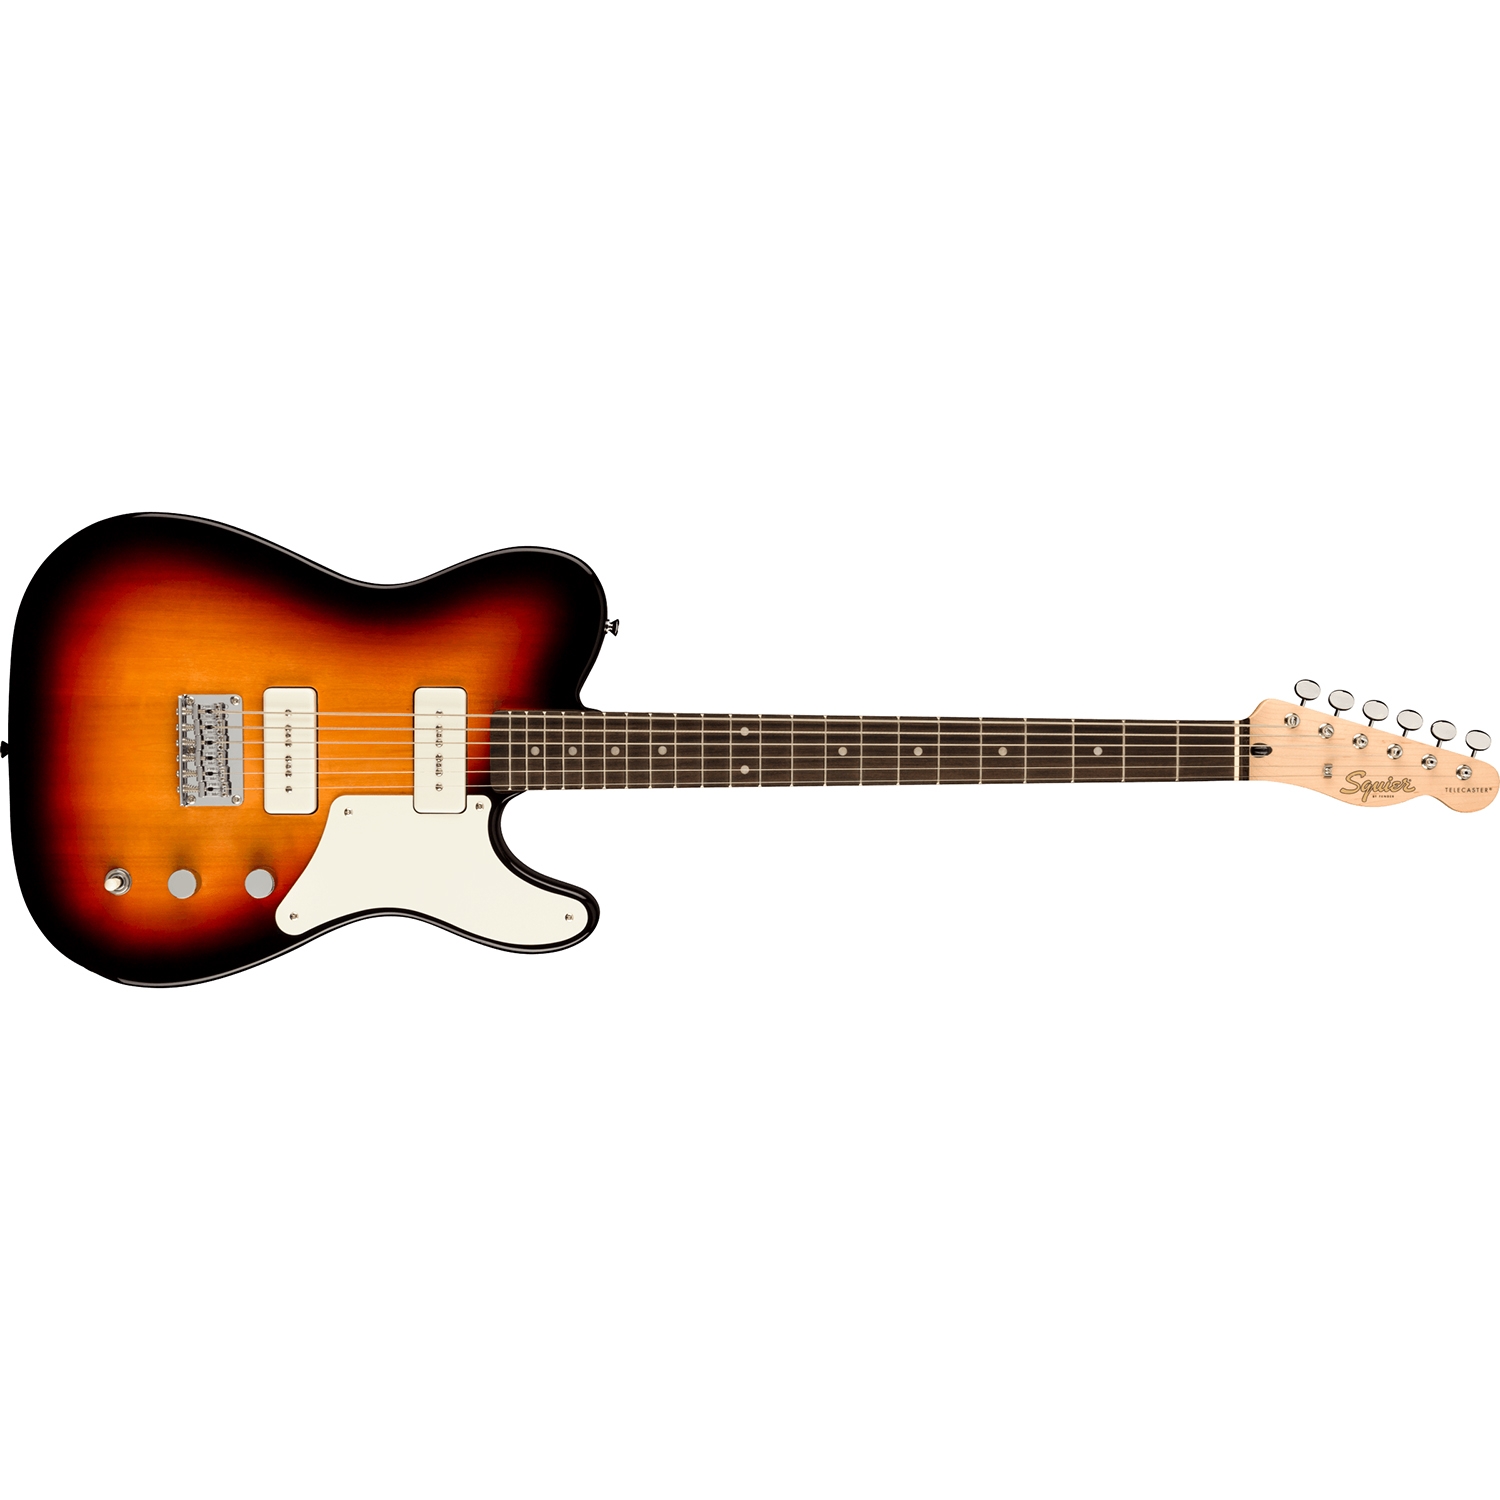 Squier (Fender) Paranormal Baritone Cabronita Telecaster Guitar